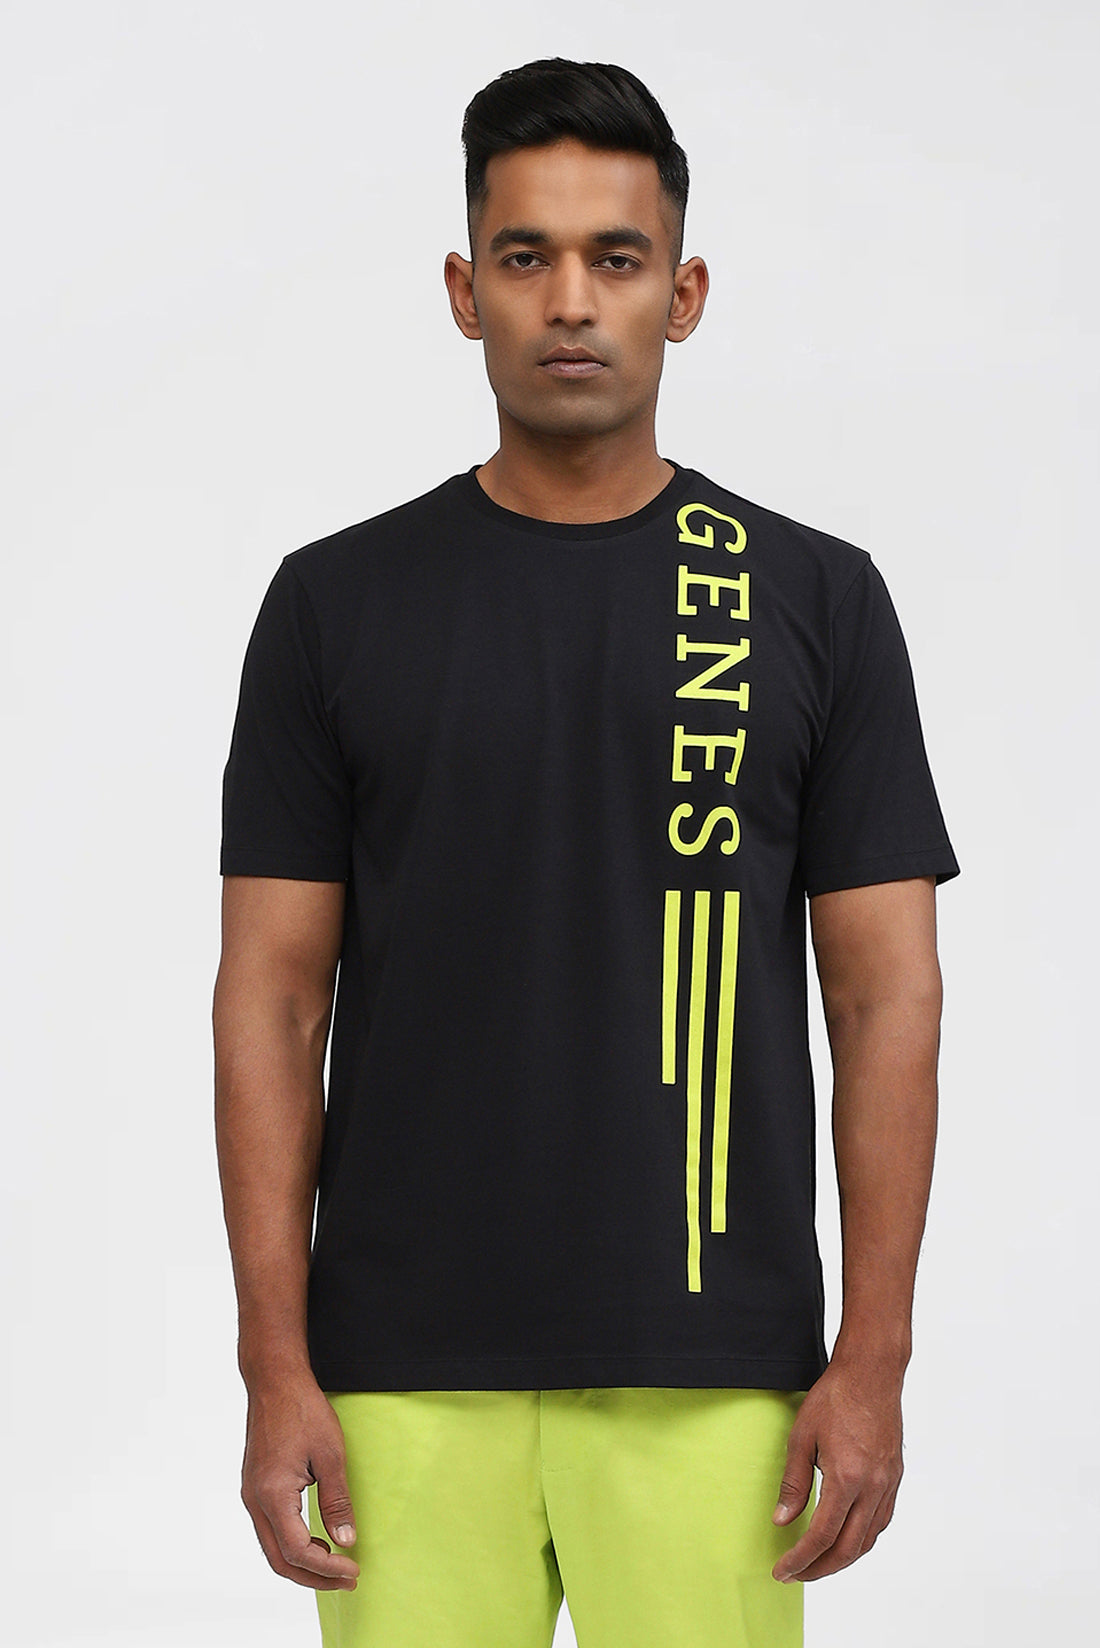 Casuals Mens T-Shirt with Genes Monogram